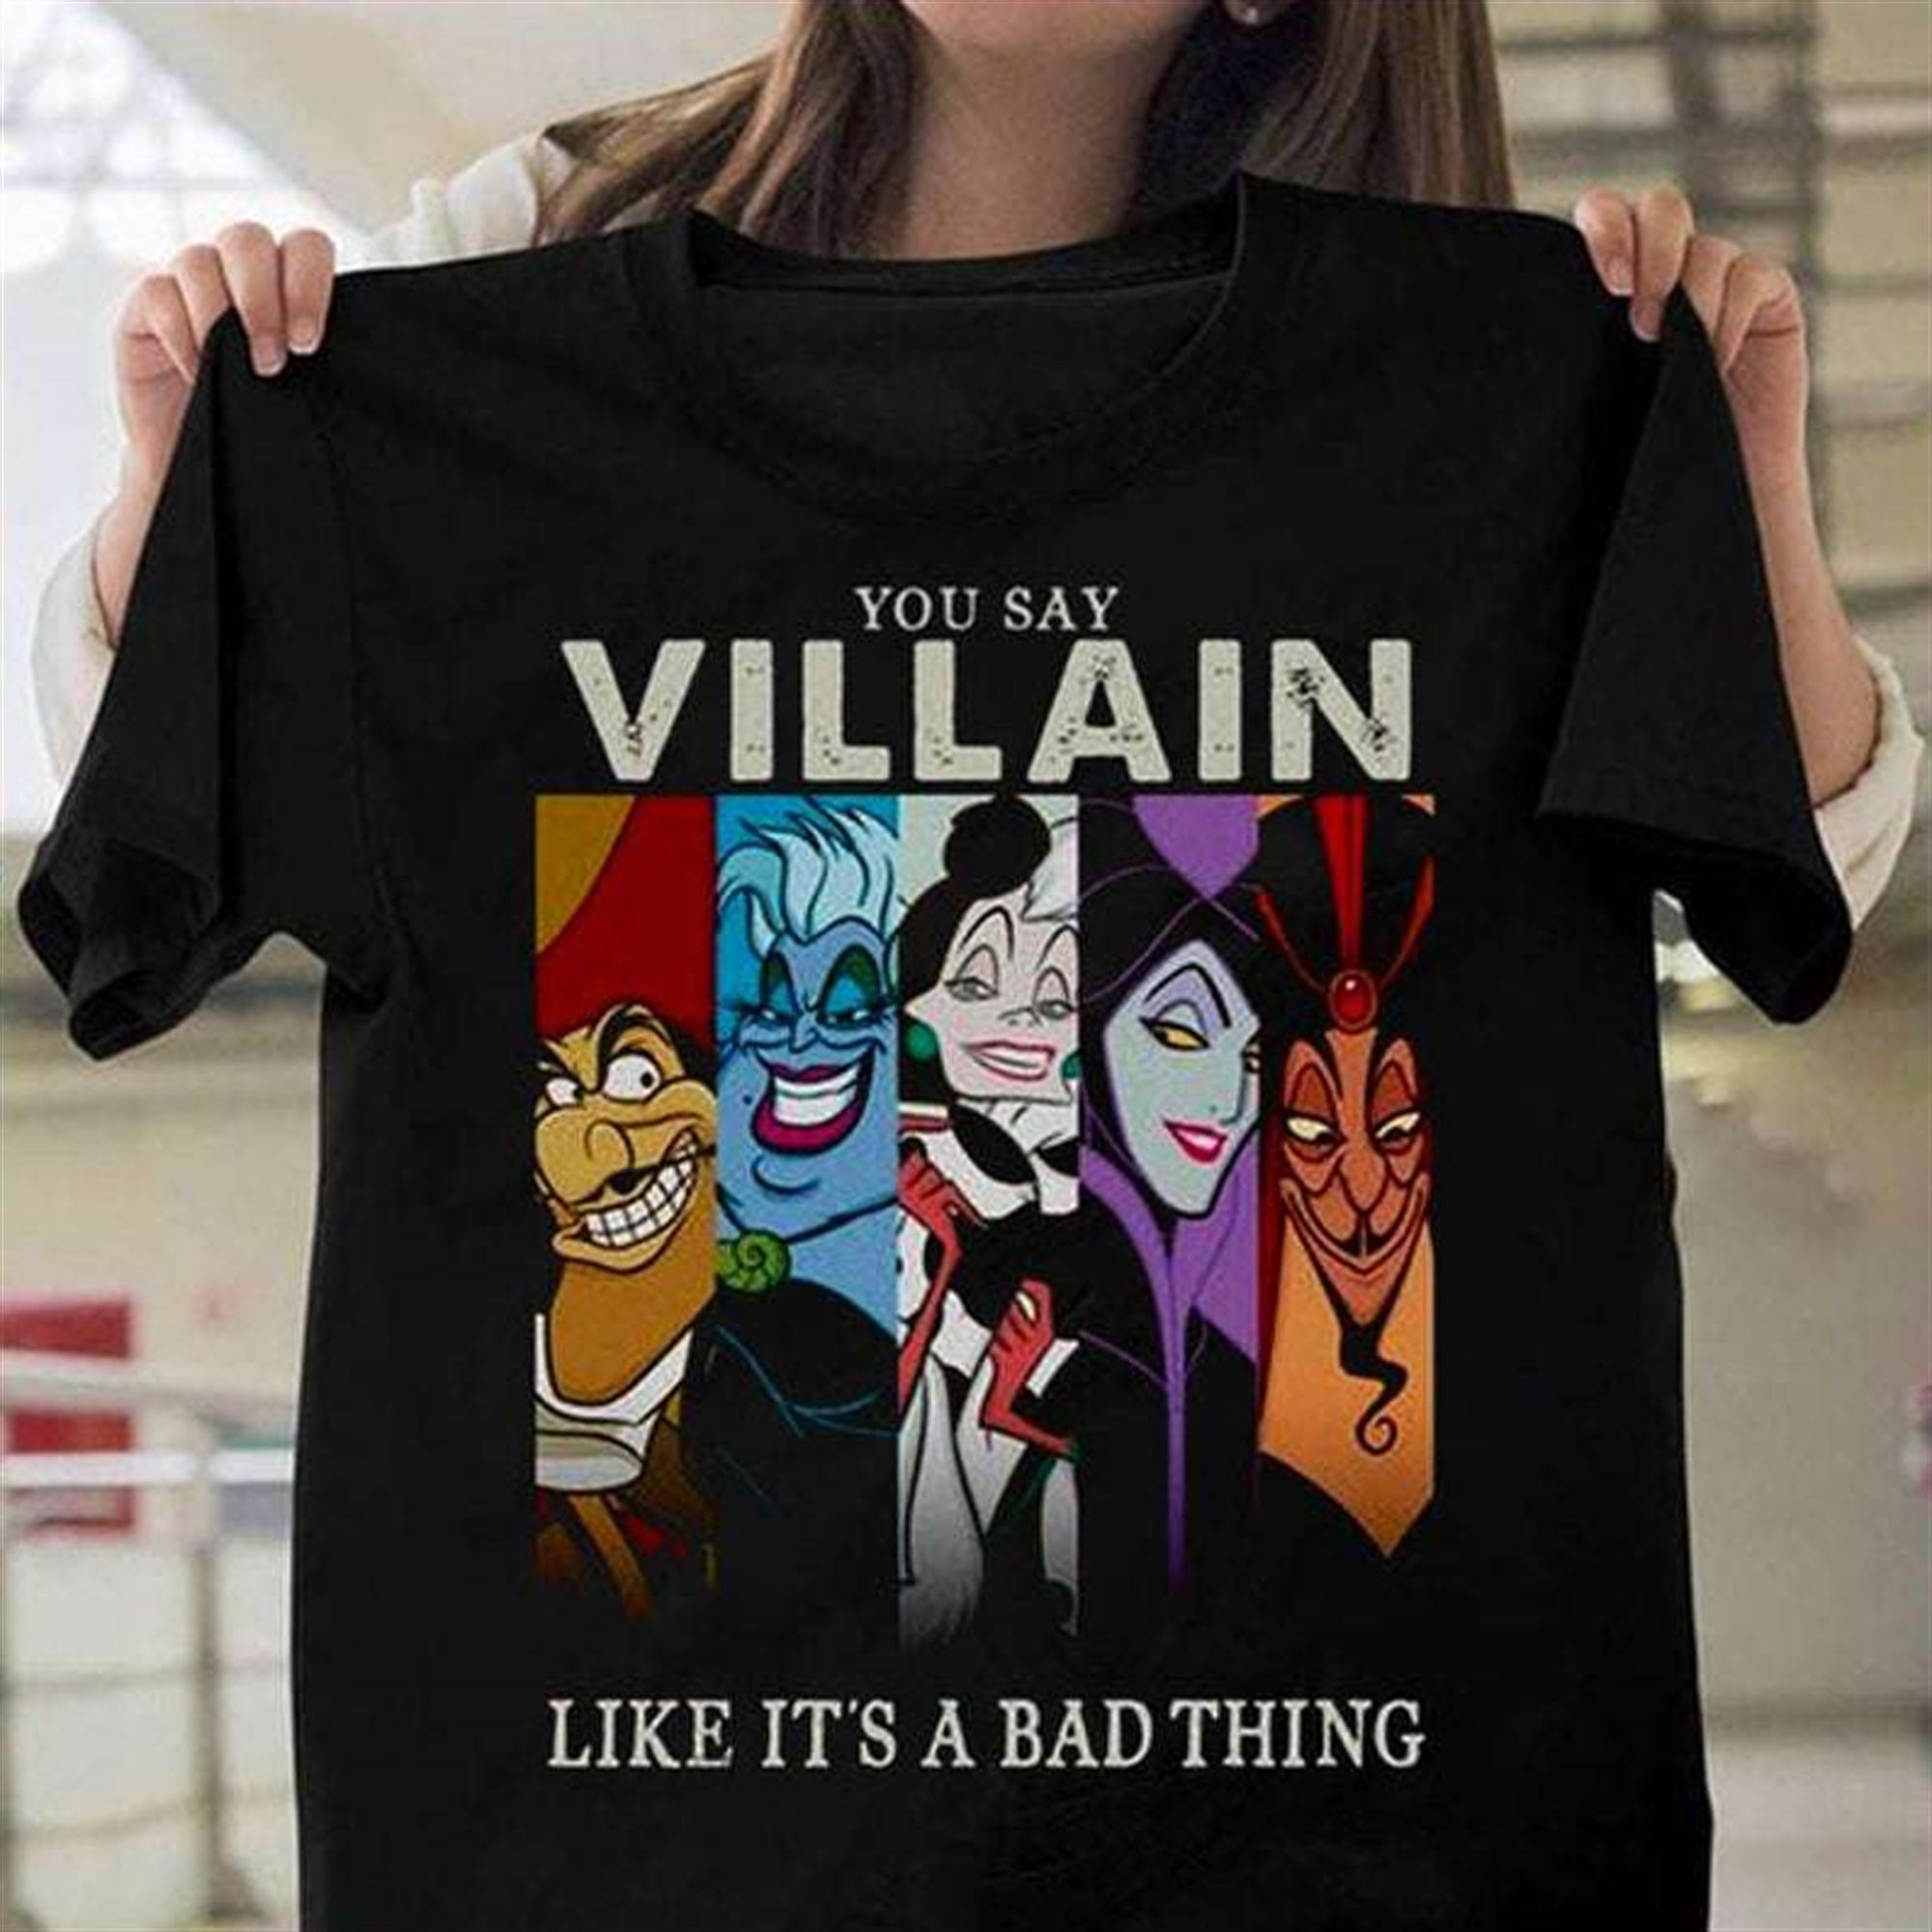 Disney Classic Villain T Shirt Plus Size Up To 5x